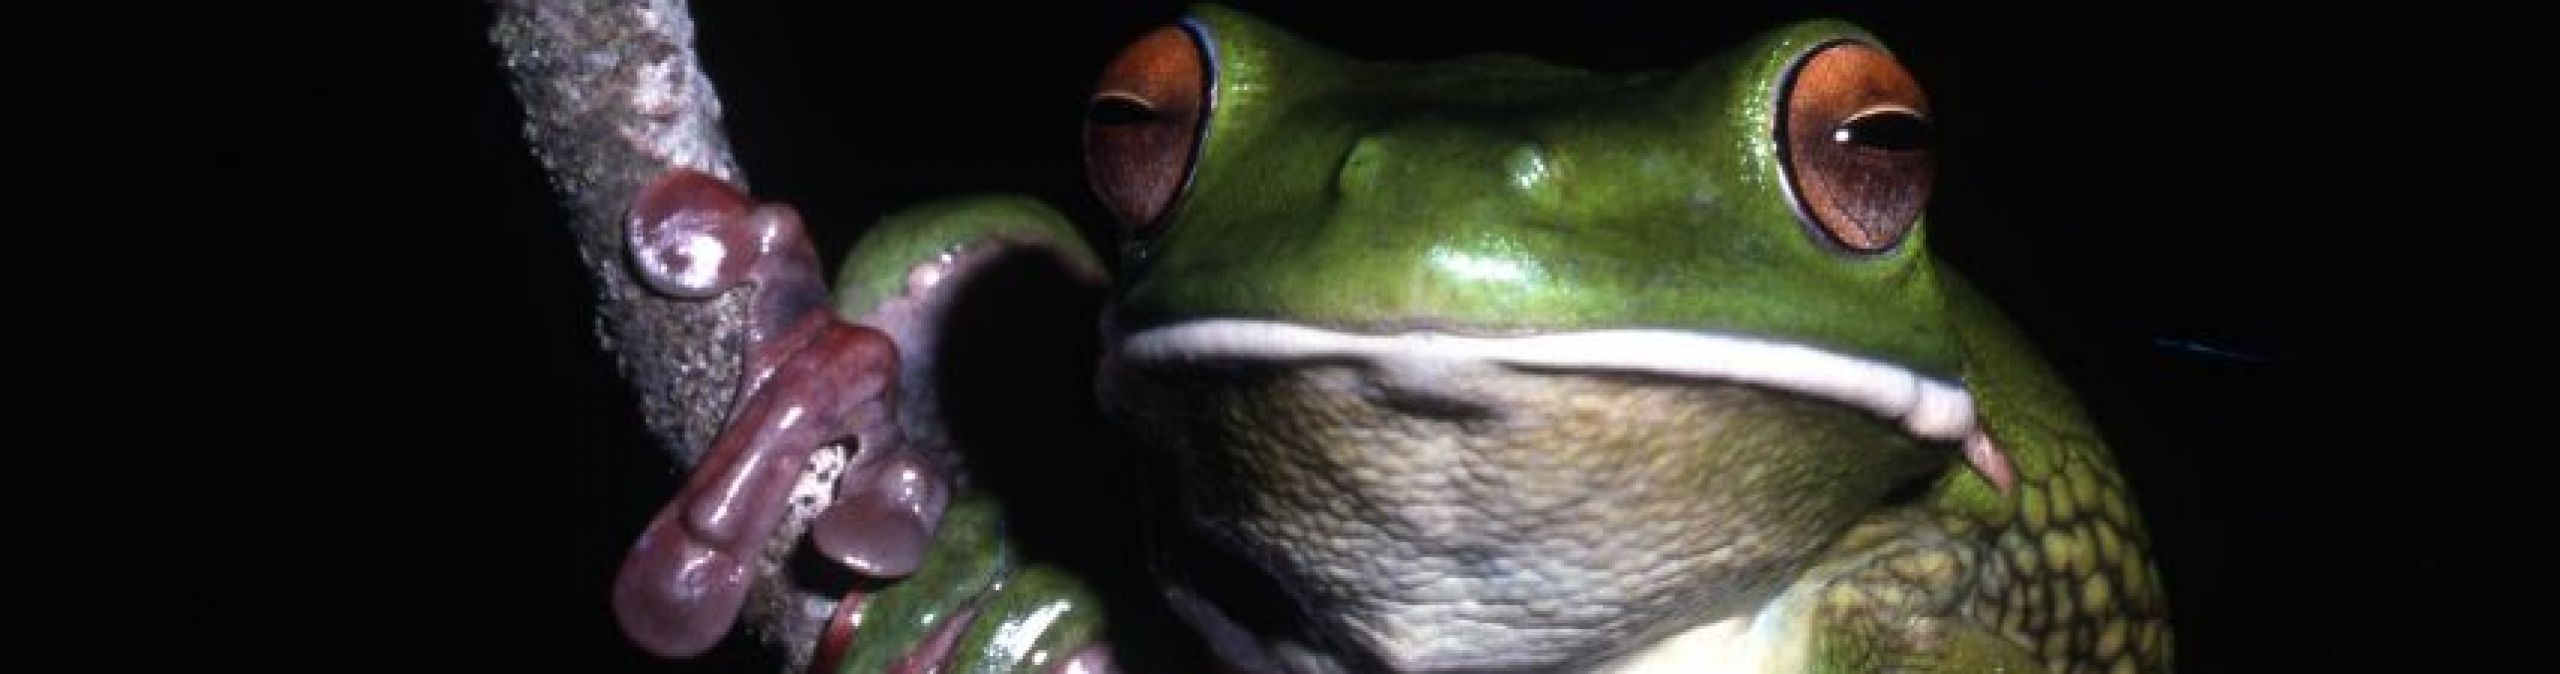 Giant Treefrog - Litoria infrafrentata
Photographer: Martin Cohen